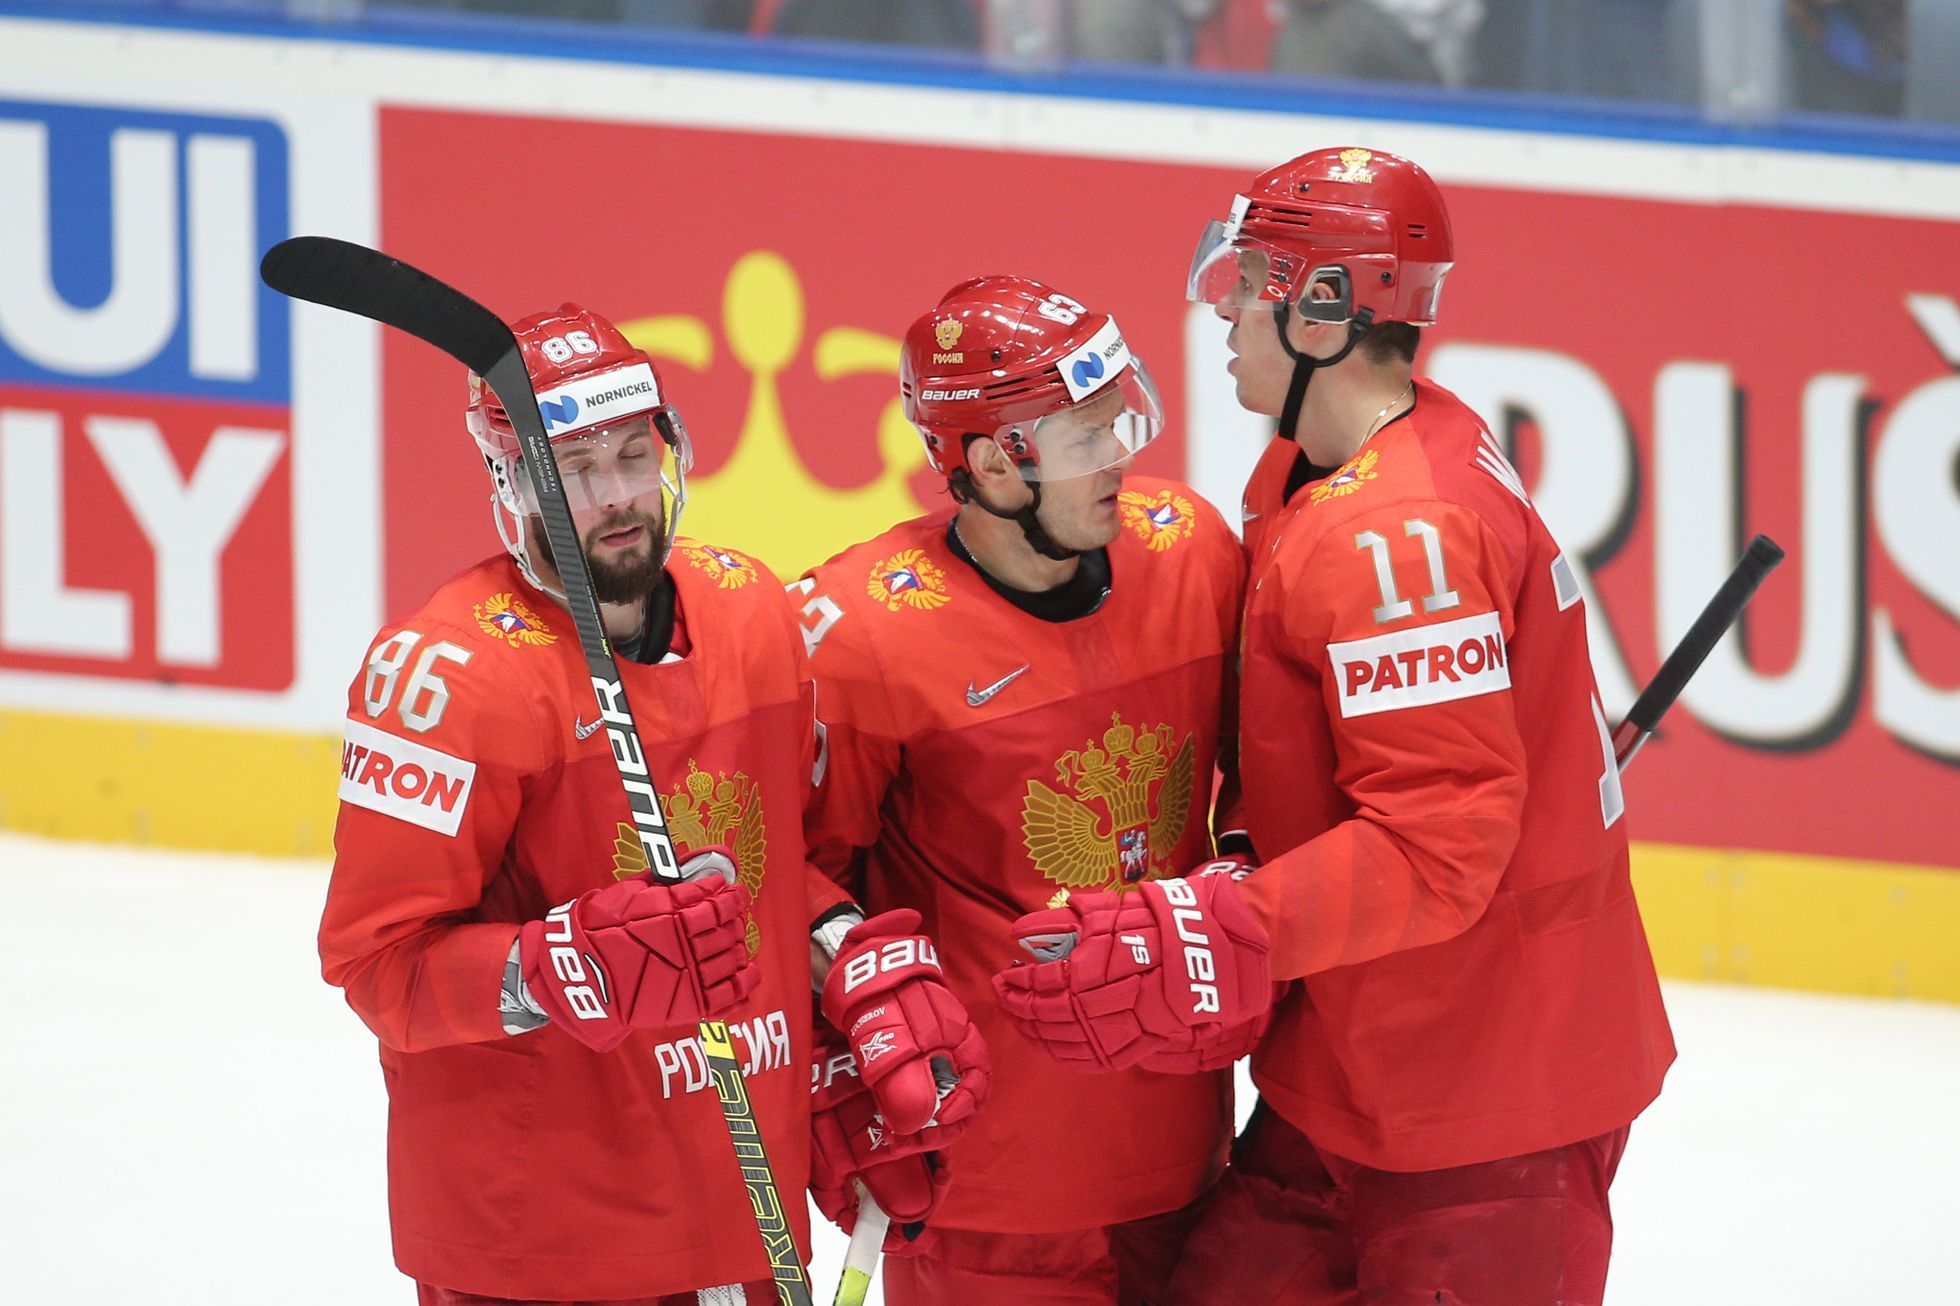 MS v hokeji 2019: Rusko - Norsko, radost Nikity Kučerova, Jevgenije Dadonova a Jevgenije Malkina